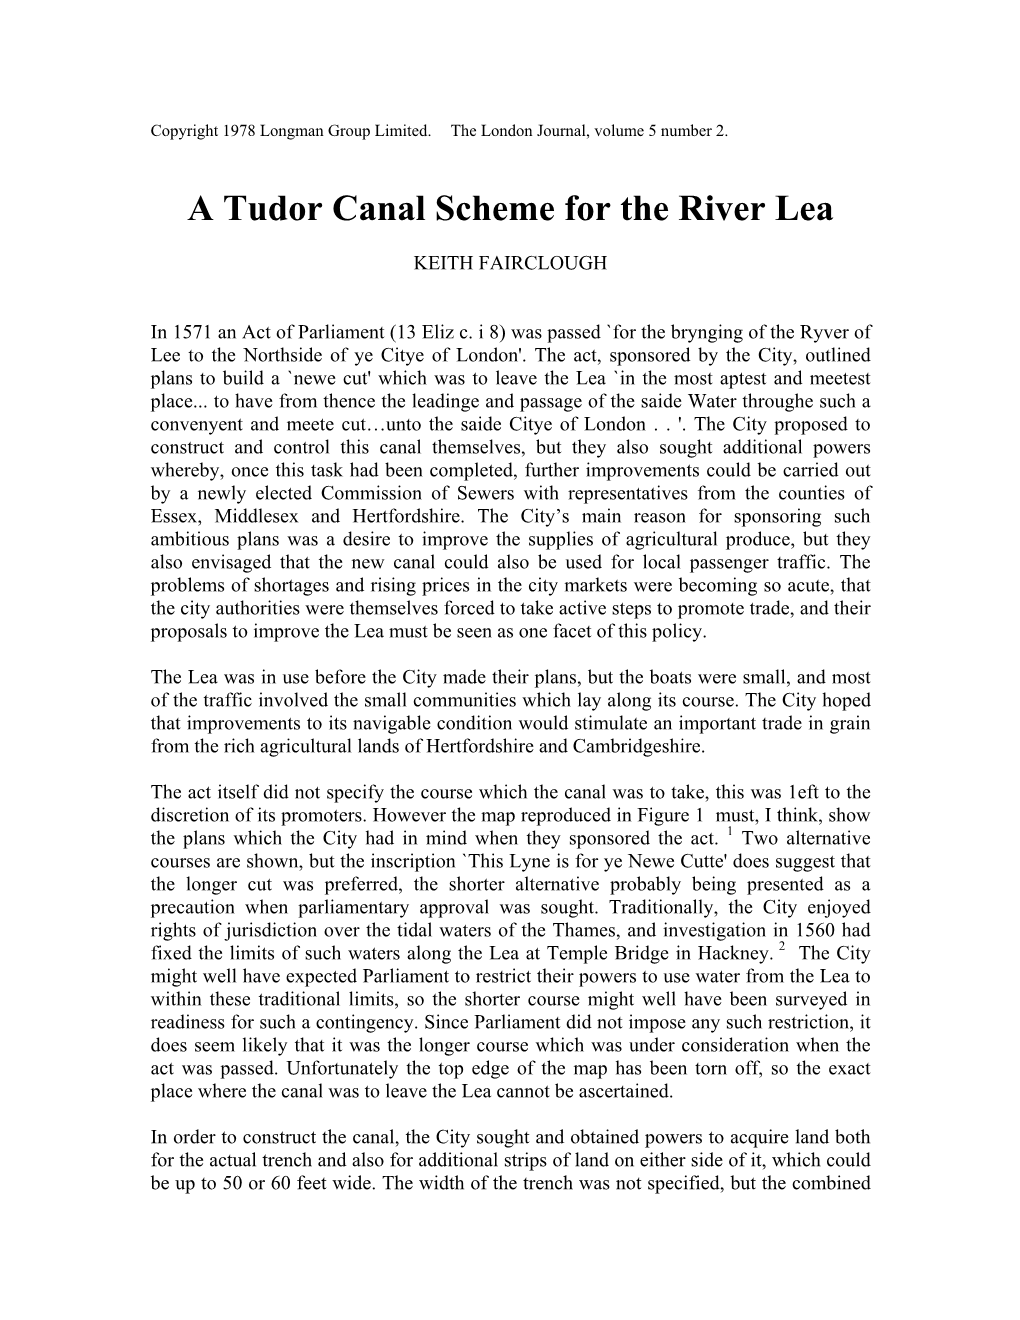 A Tudor Canal Scheme for the River Lea